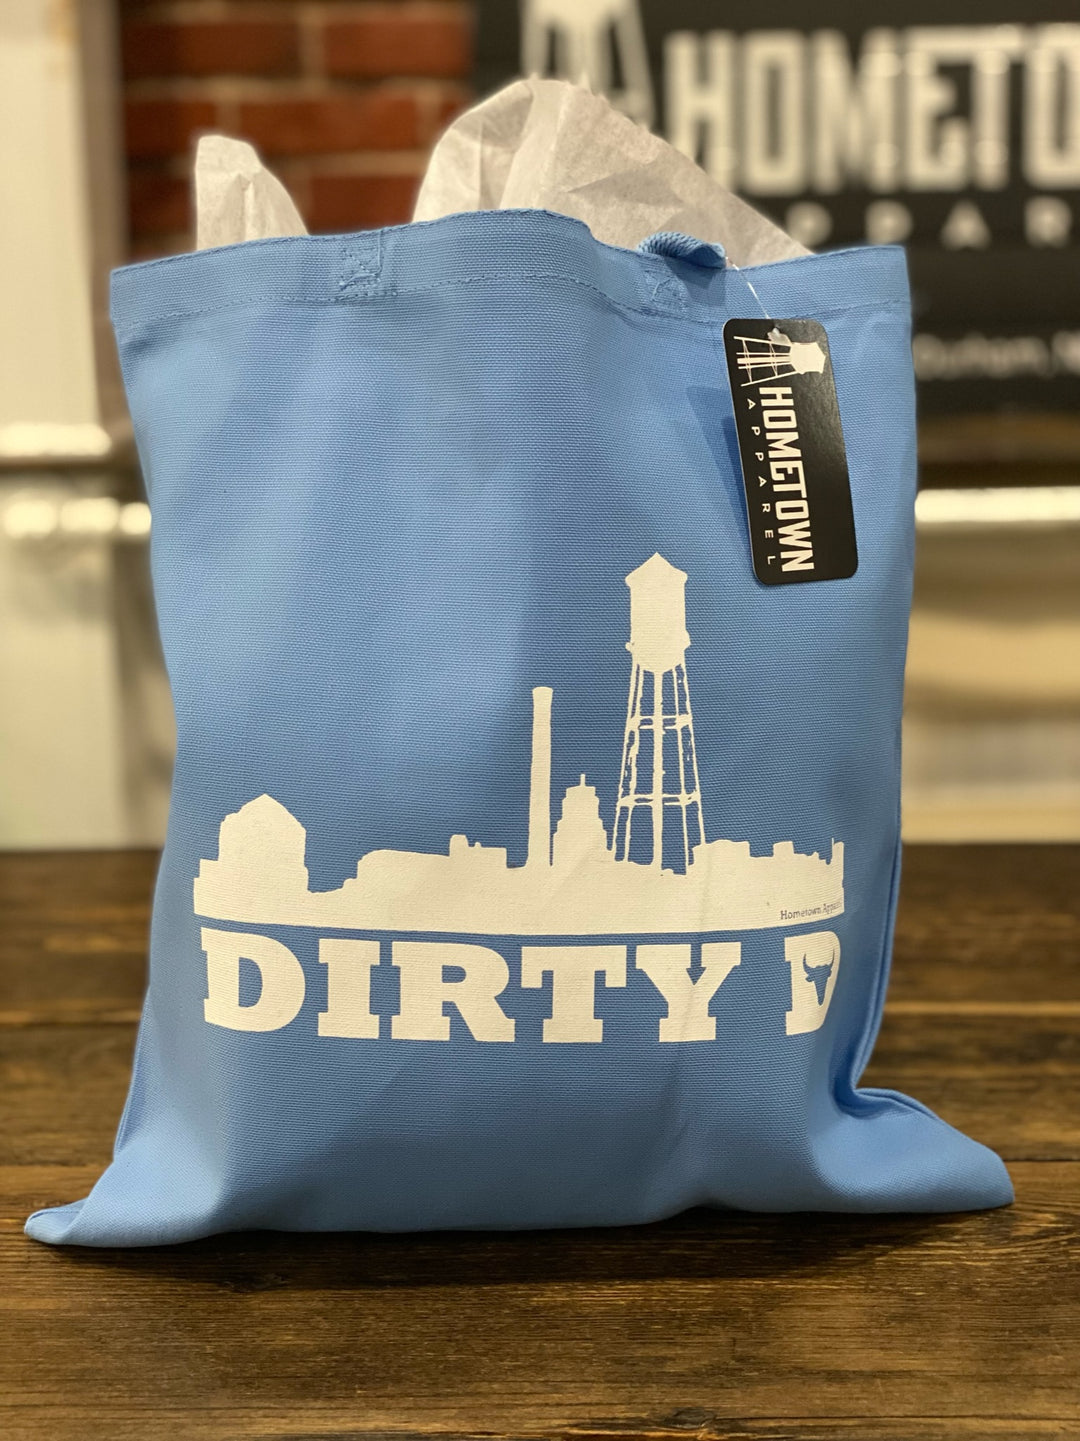 Dirty D Bag #9